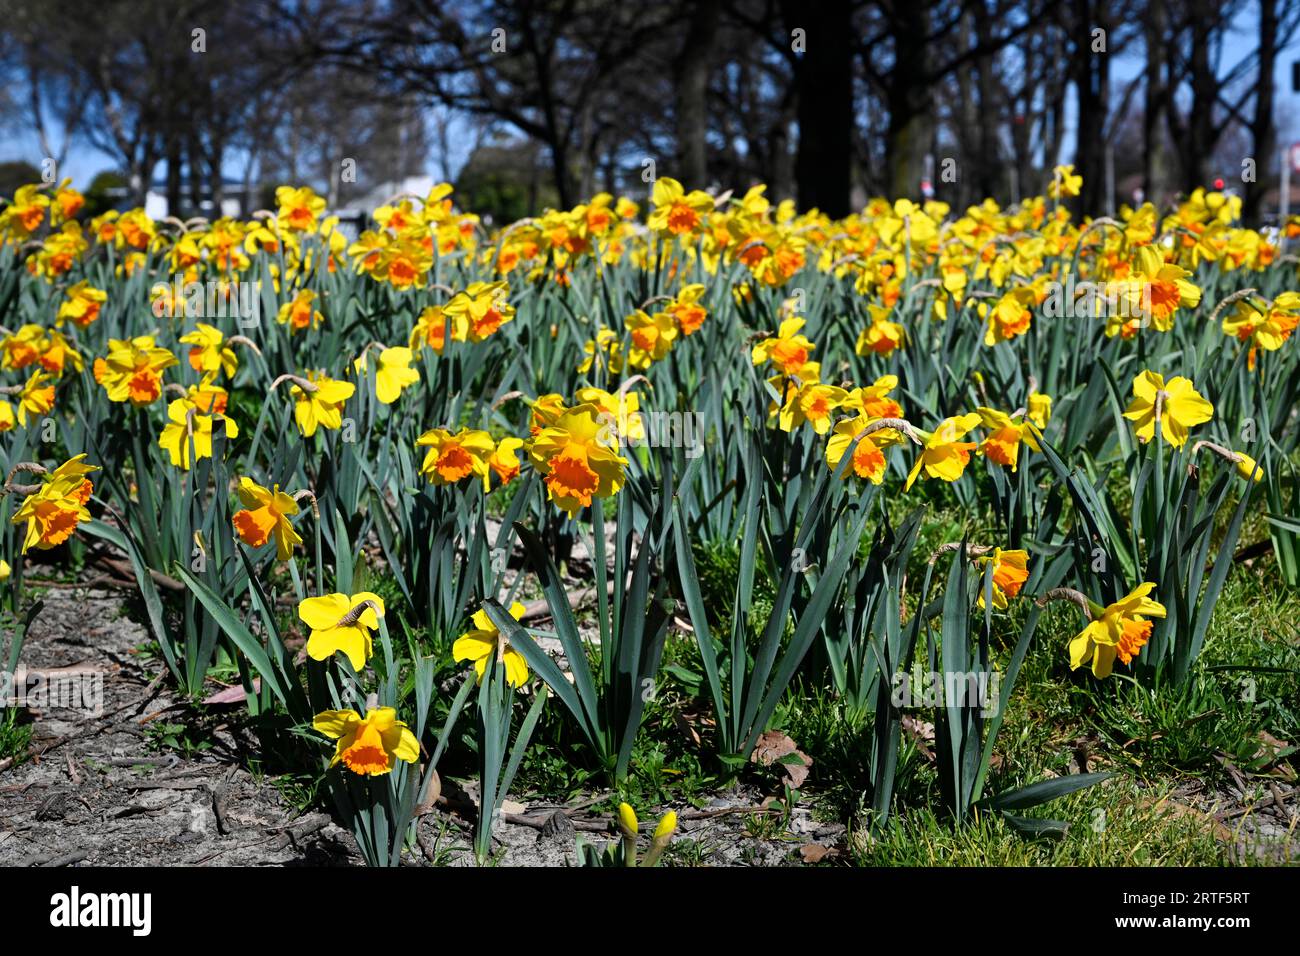 Frühling in Christchurch, Neuseeland. Narzissen in voller Blüte im Flay Park. Stockfoto